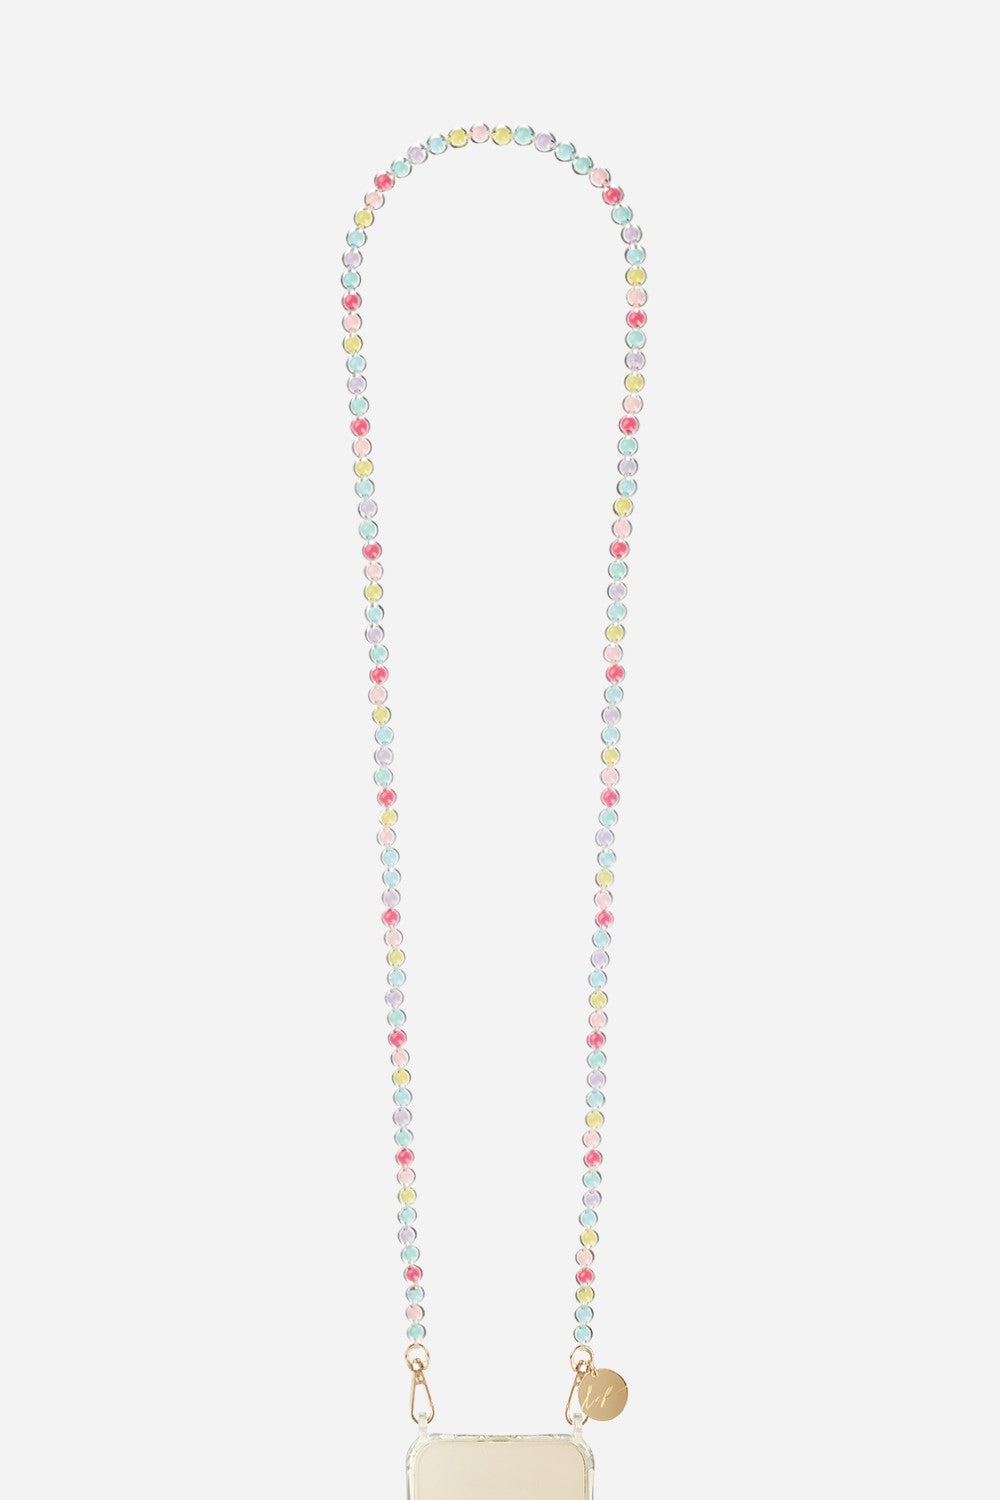 Chaine Longue Elona Pastelle 120 cm